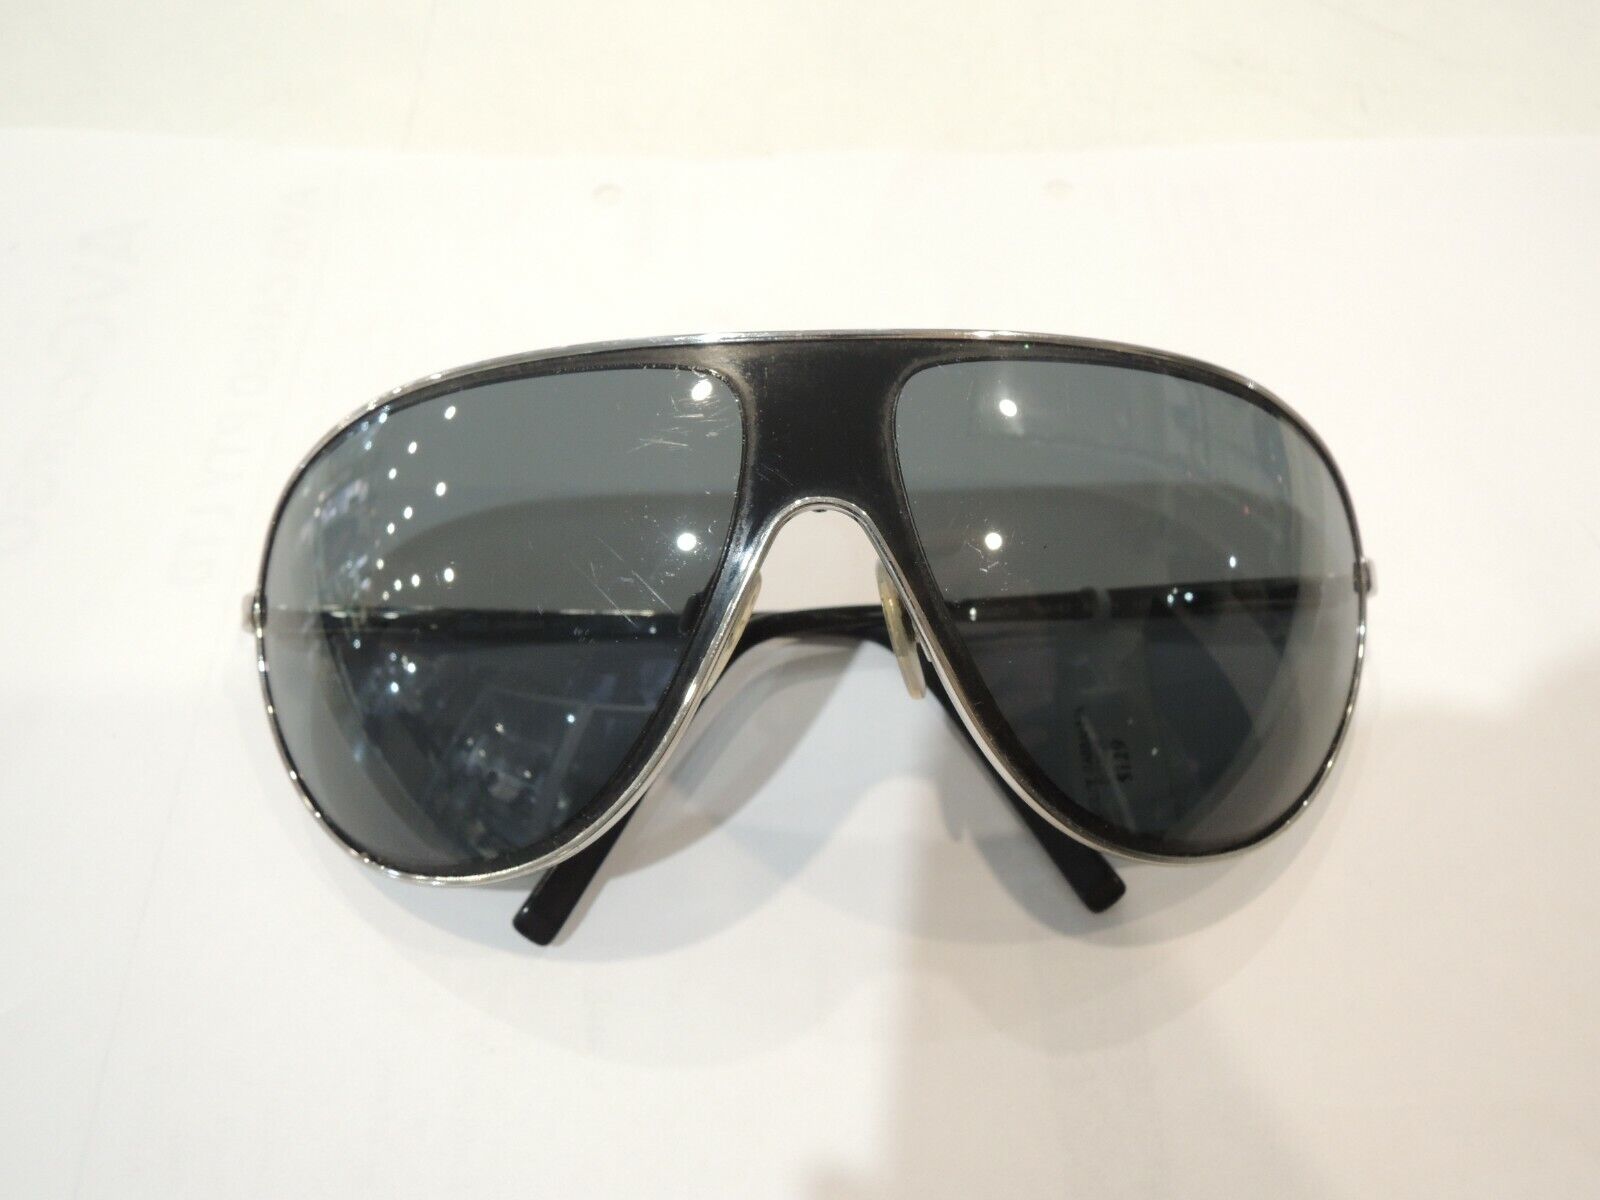 Dolce & Gabbana DG2024 158/87 65-15 125 Sunglasses in Grey - Good Condition